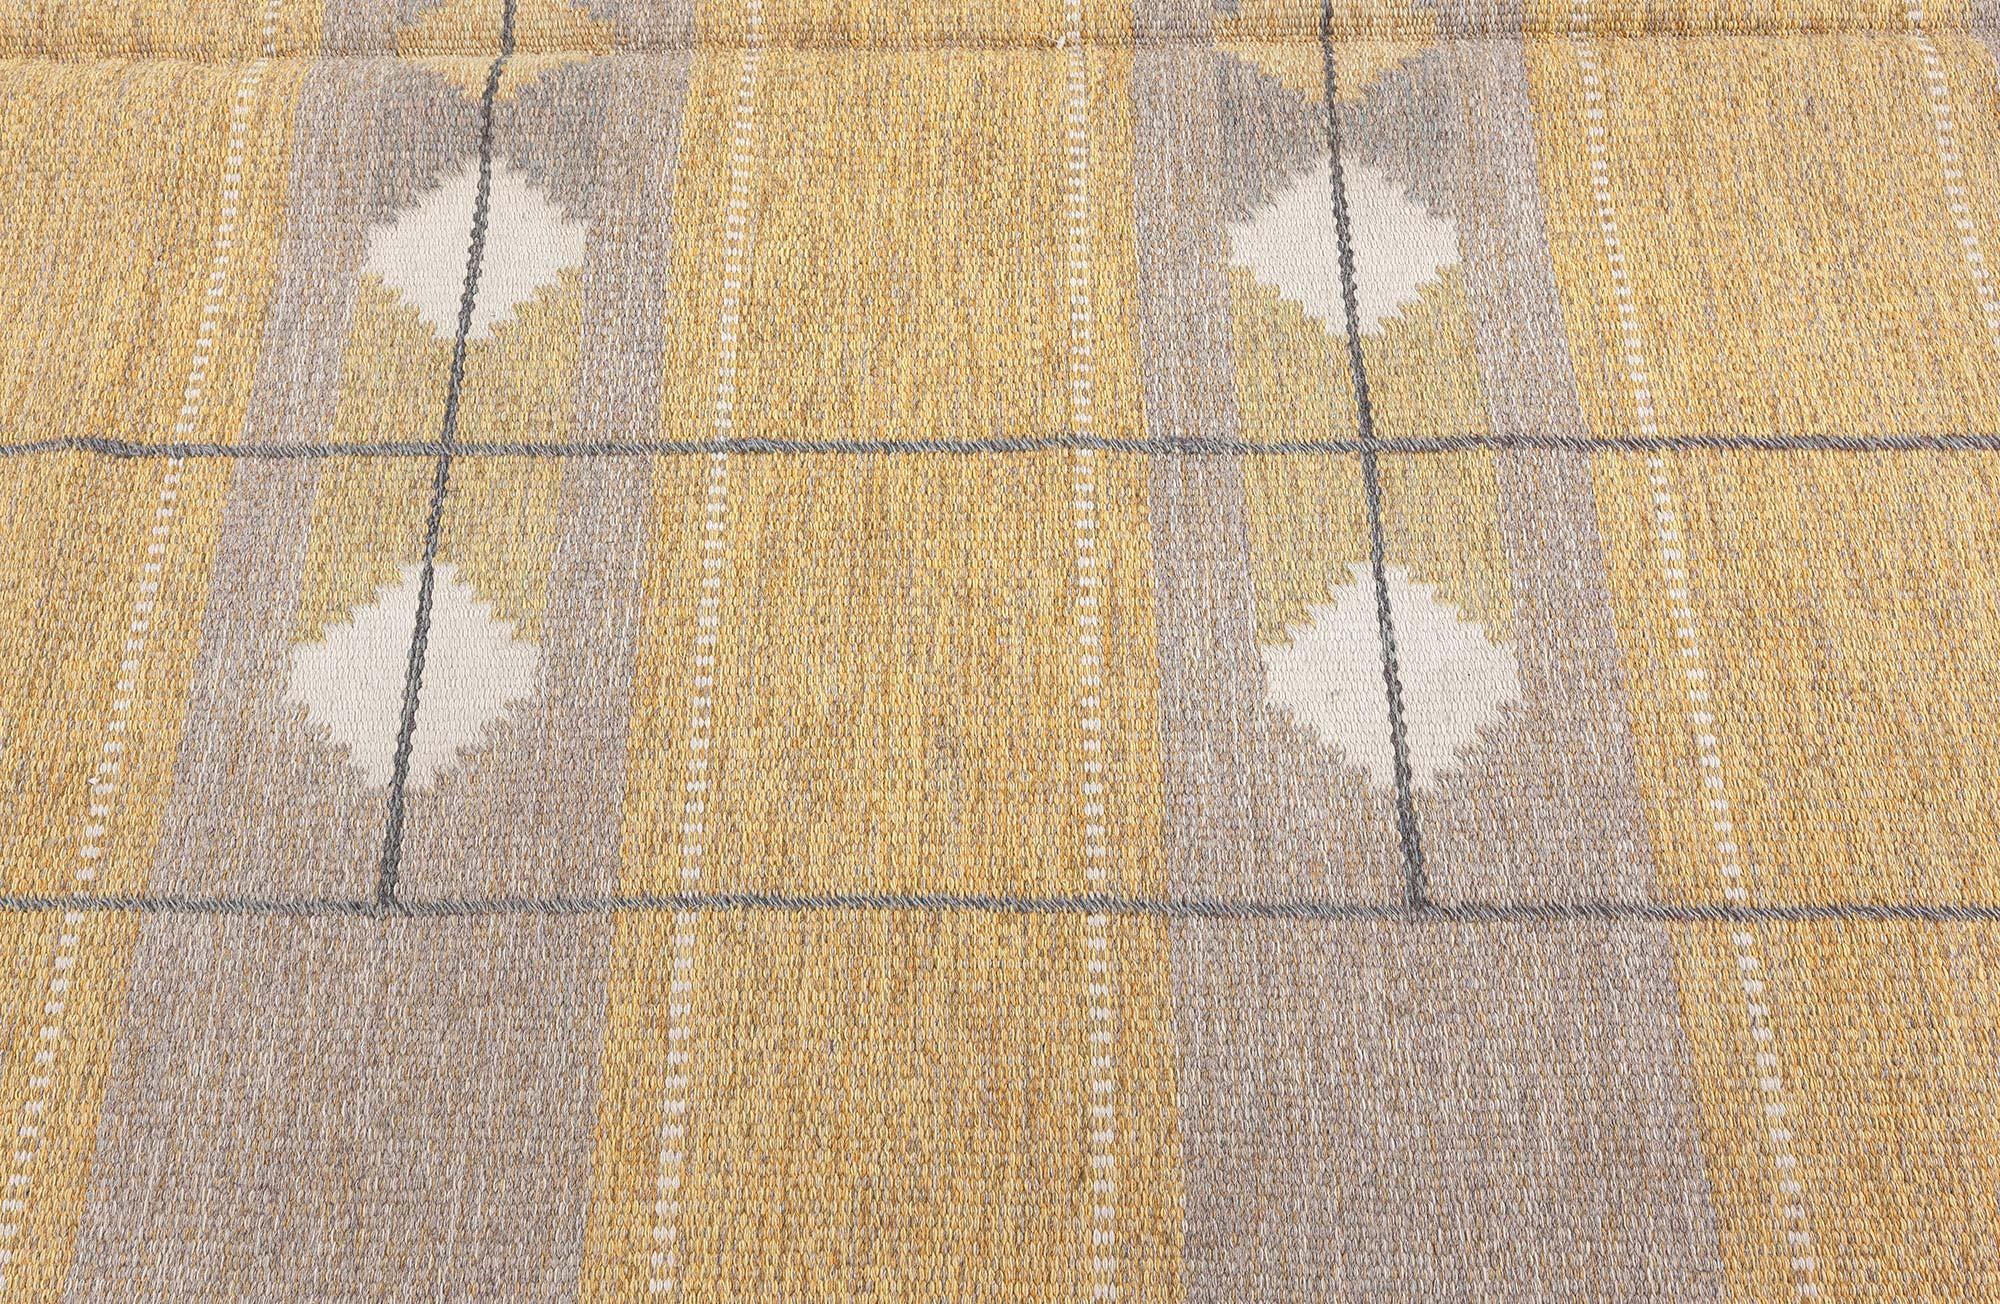 Mid-20th century Swedish yellow flat-weave wool rug
Size: 5'5